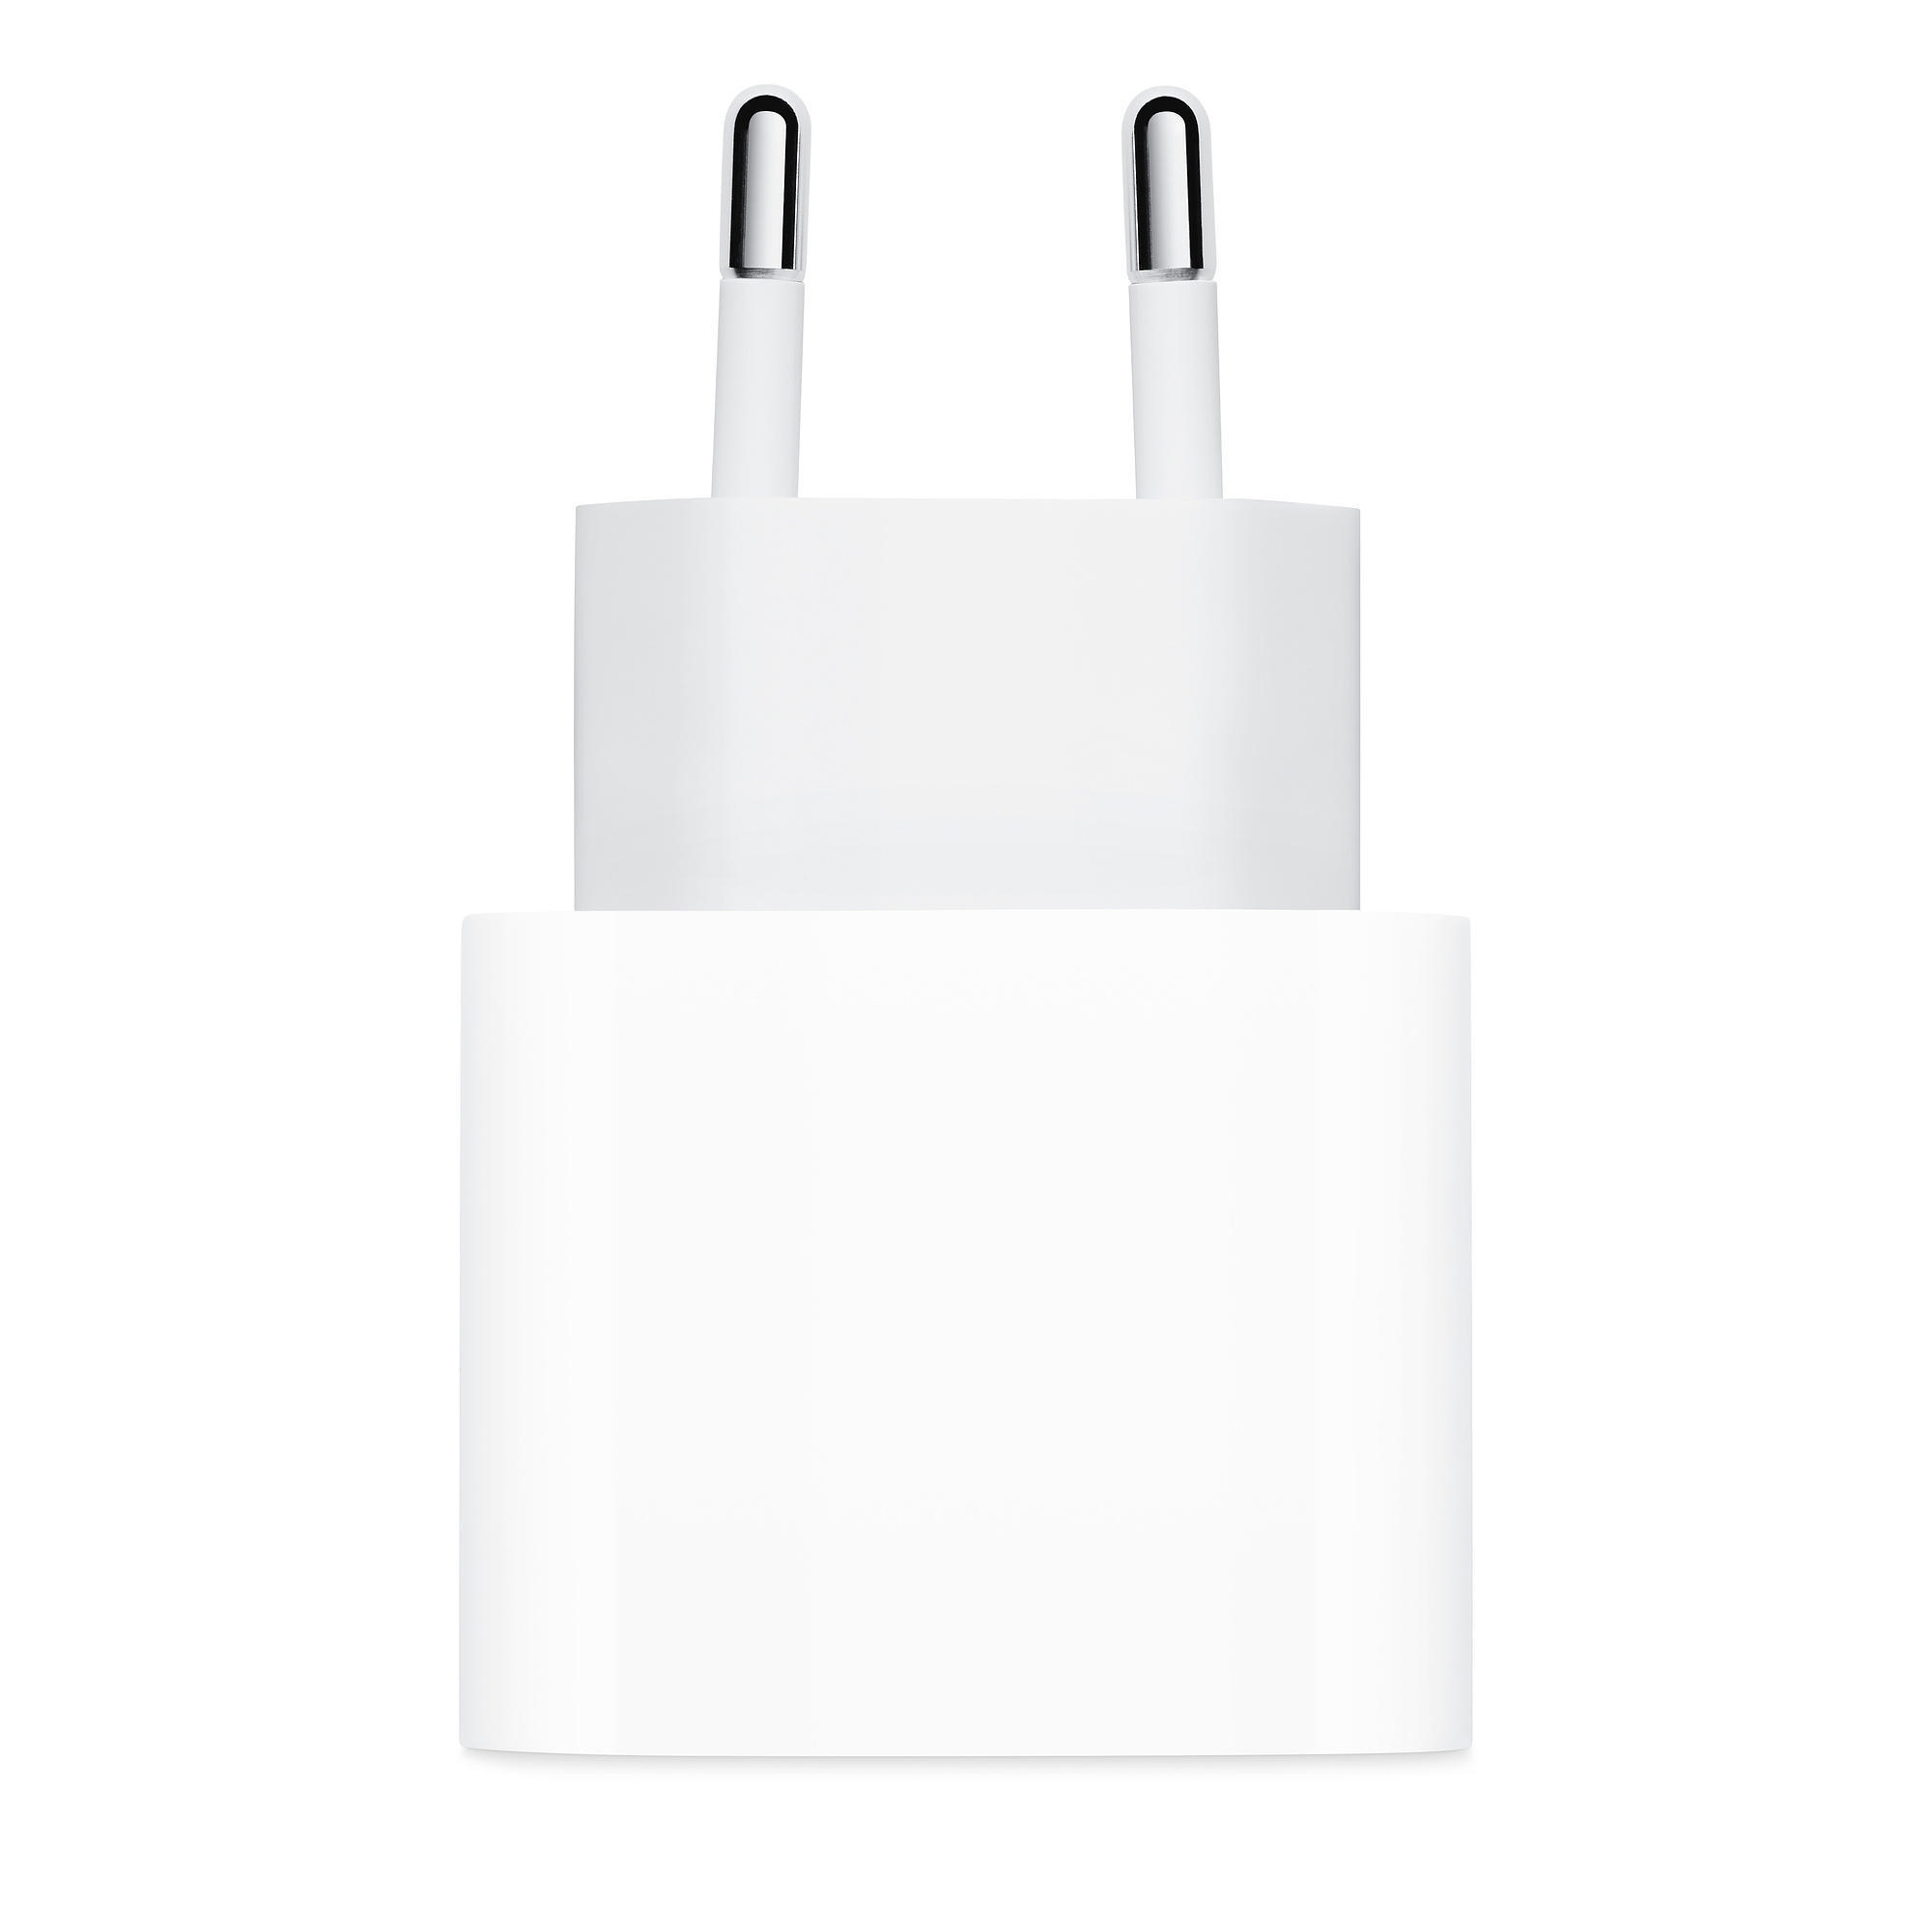 Apple Power Adapter 20 APPLE W, Weiß C USB Netzteil